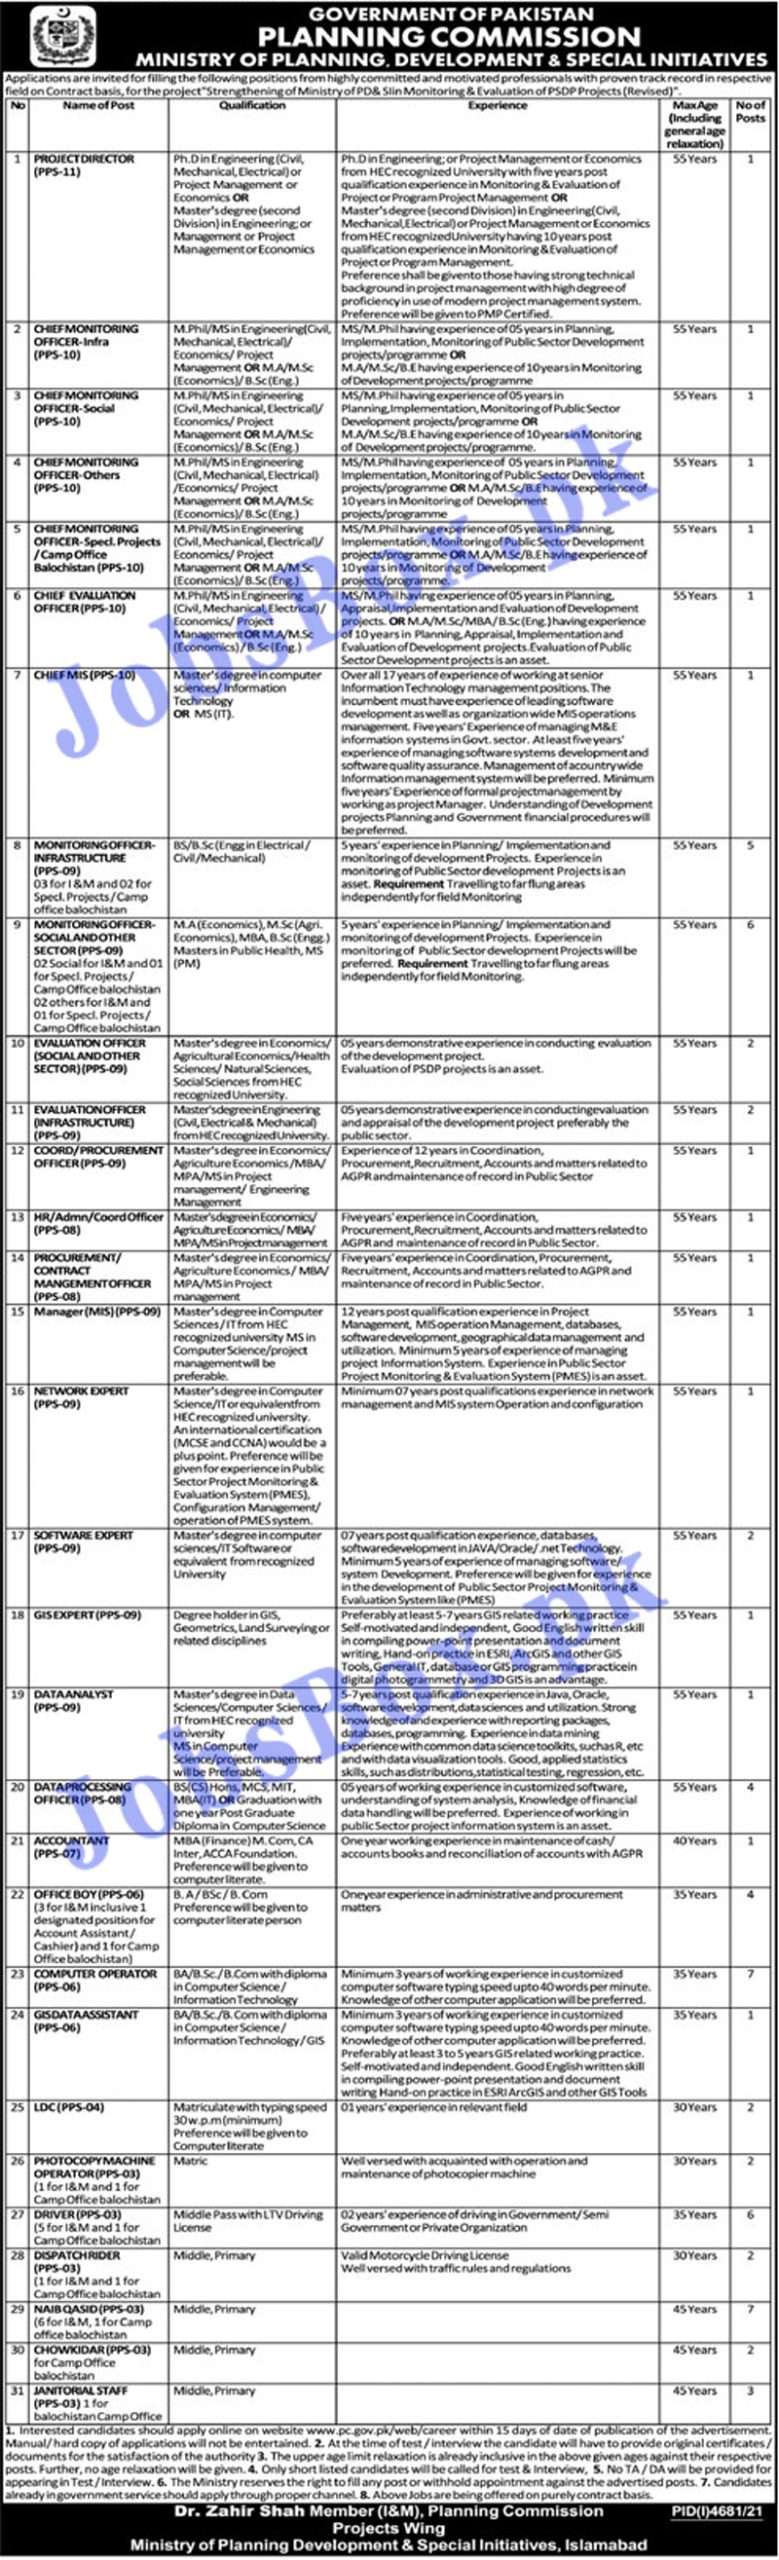 planning commission jobs 2022 advertisement || government of pakistan planning commission jobs 2022